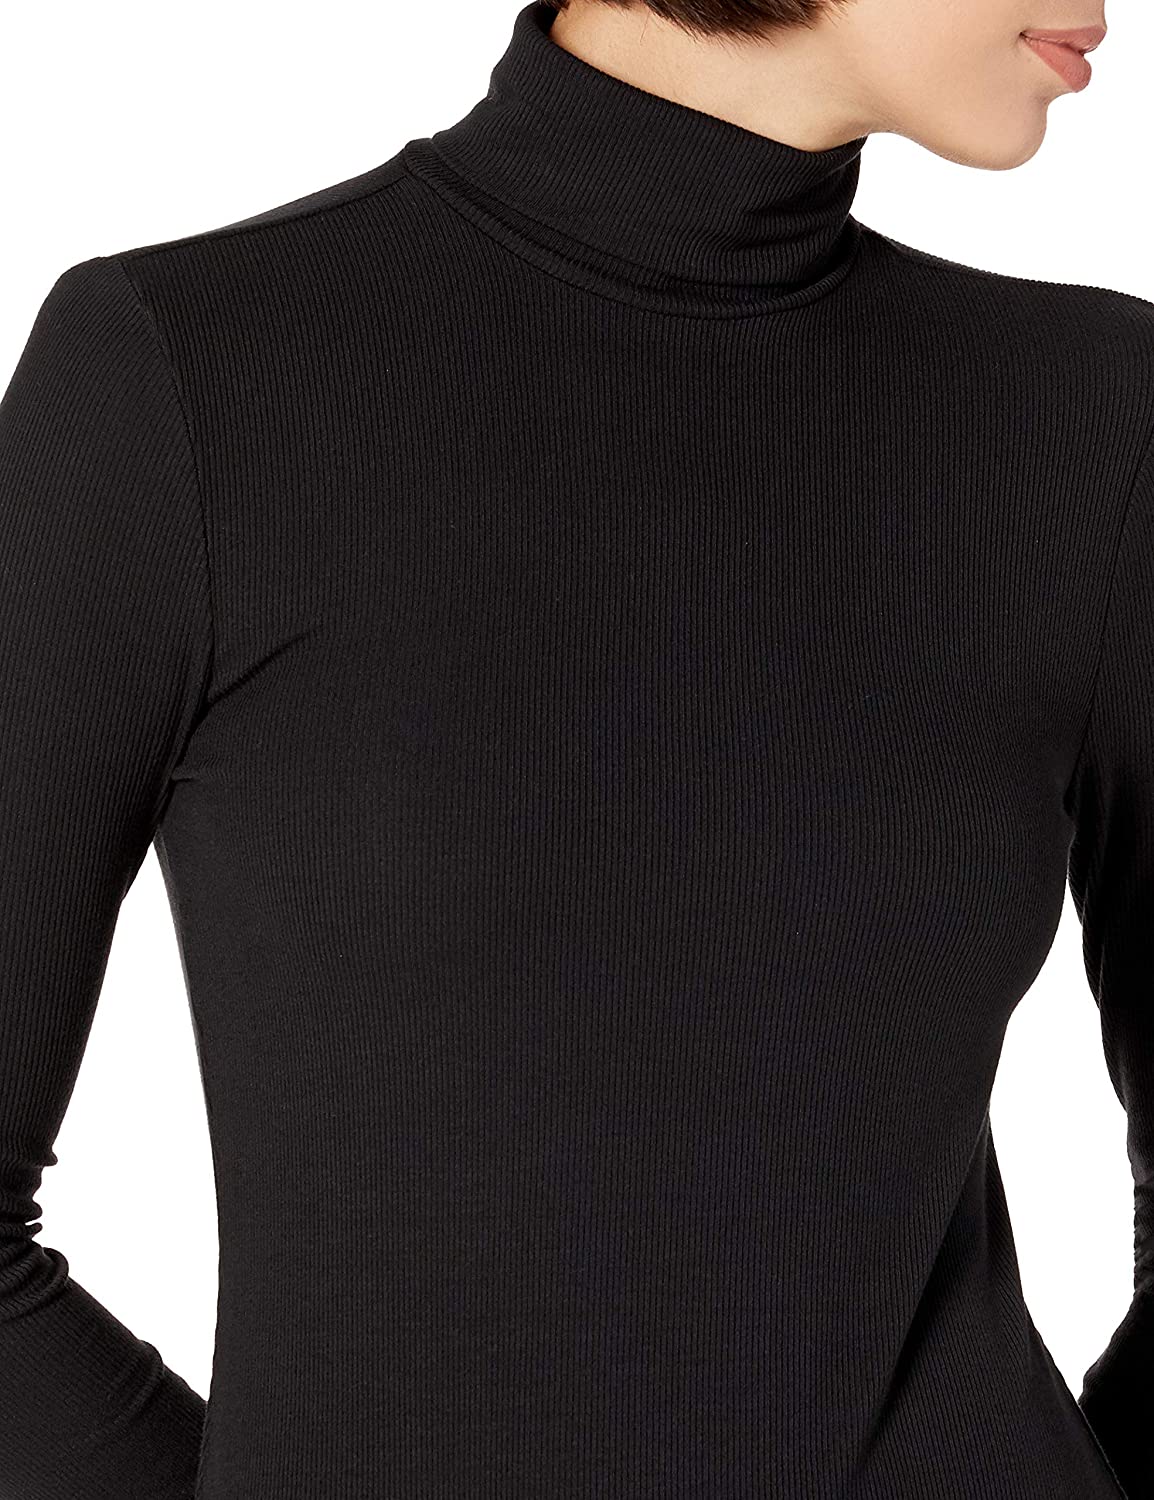 Women's Rayon-Spandex Fine Rib Standard-Fit, Black, Size Small dUzh ...